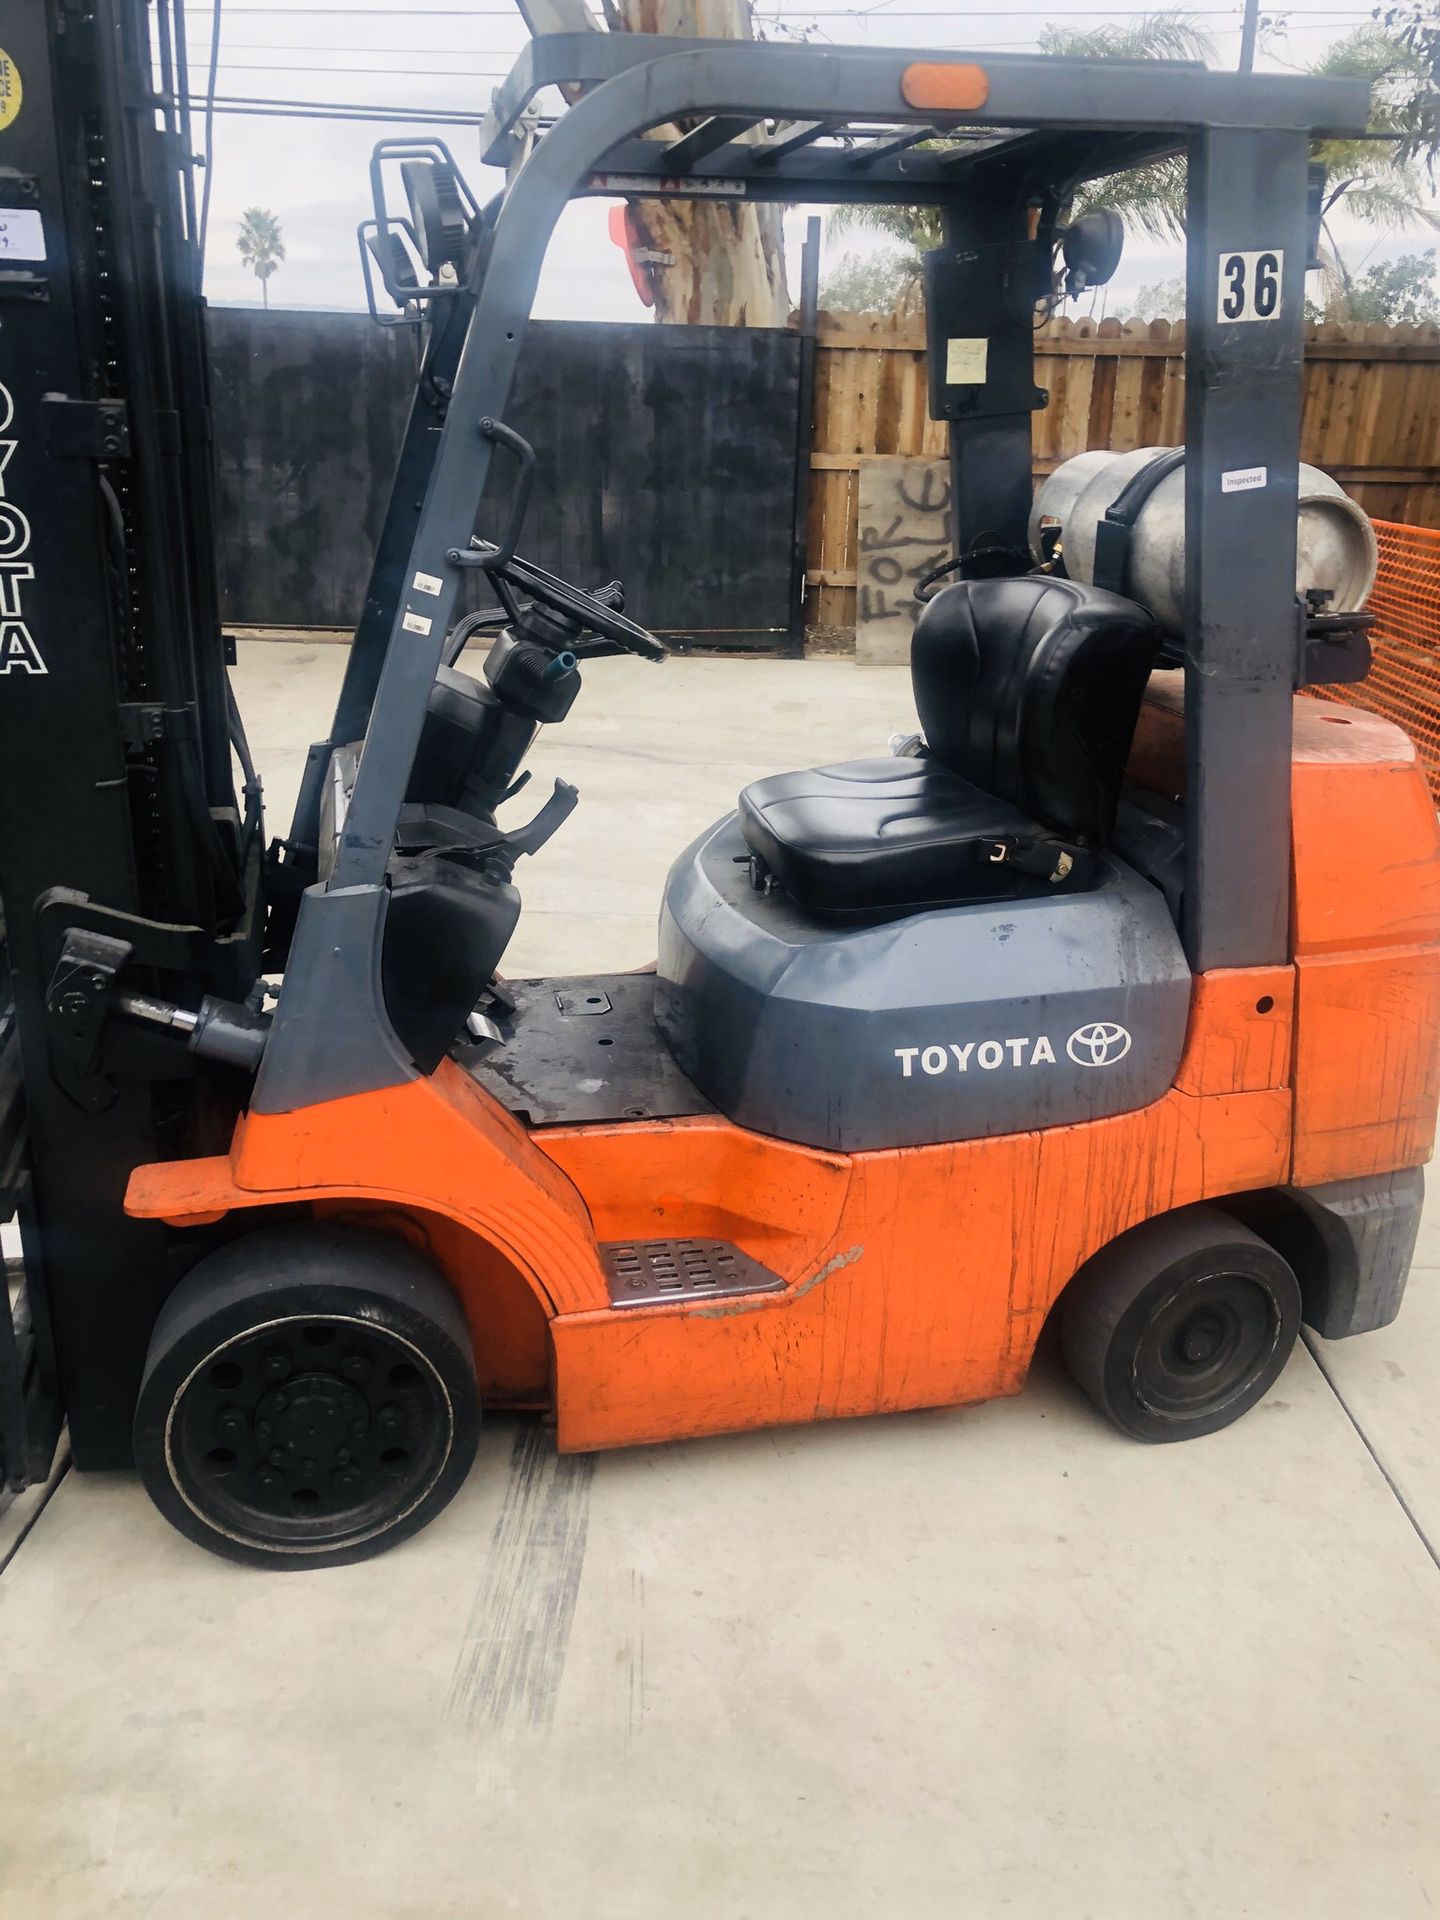 Forklift for sale 7 series 6,000 OBO